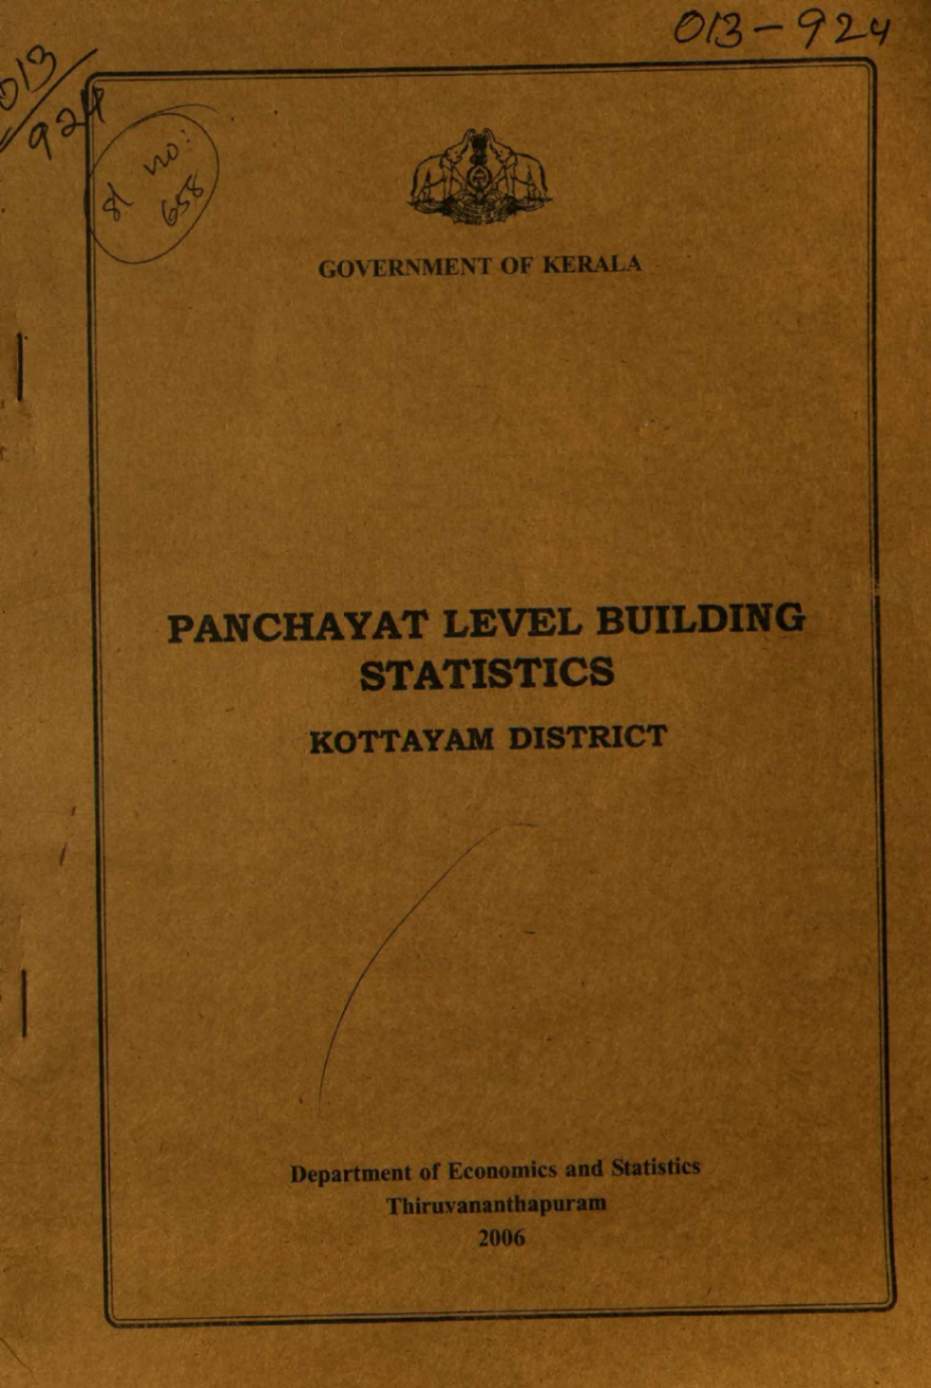 Panchayat level Building Statistics 2001-04 Kottayam District